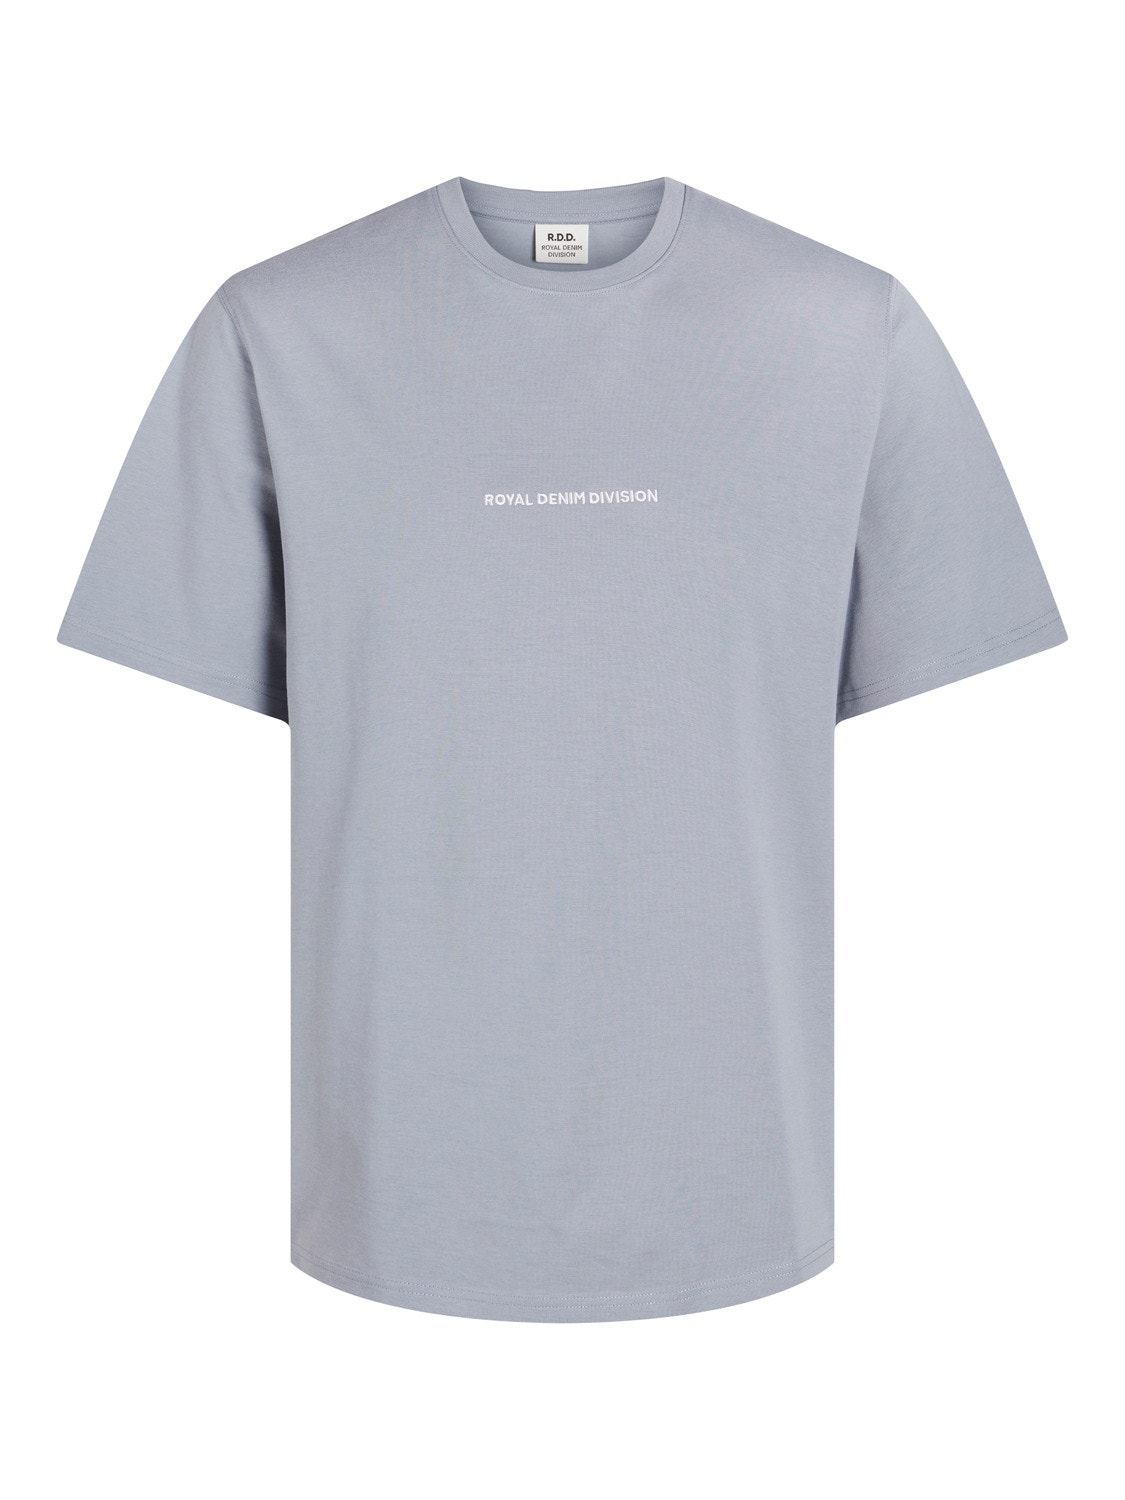 Jack & Jones RDD Printed Crew neck T-shirt -Tradewinds - 12253392